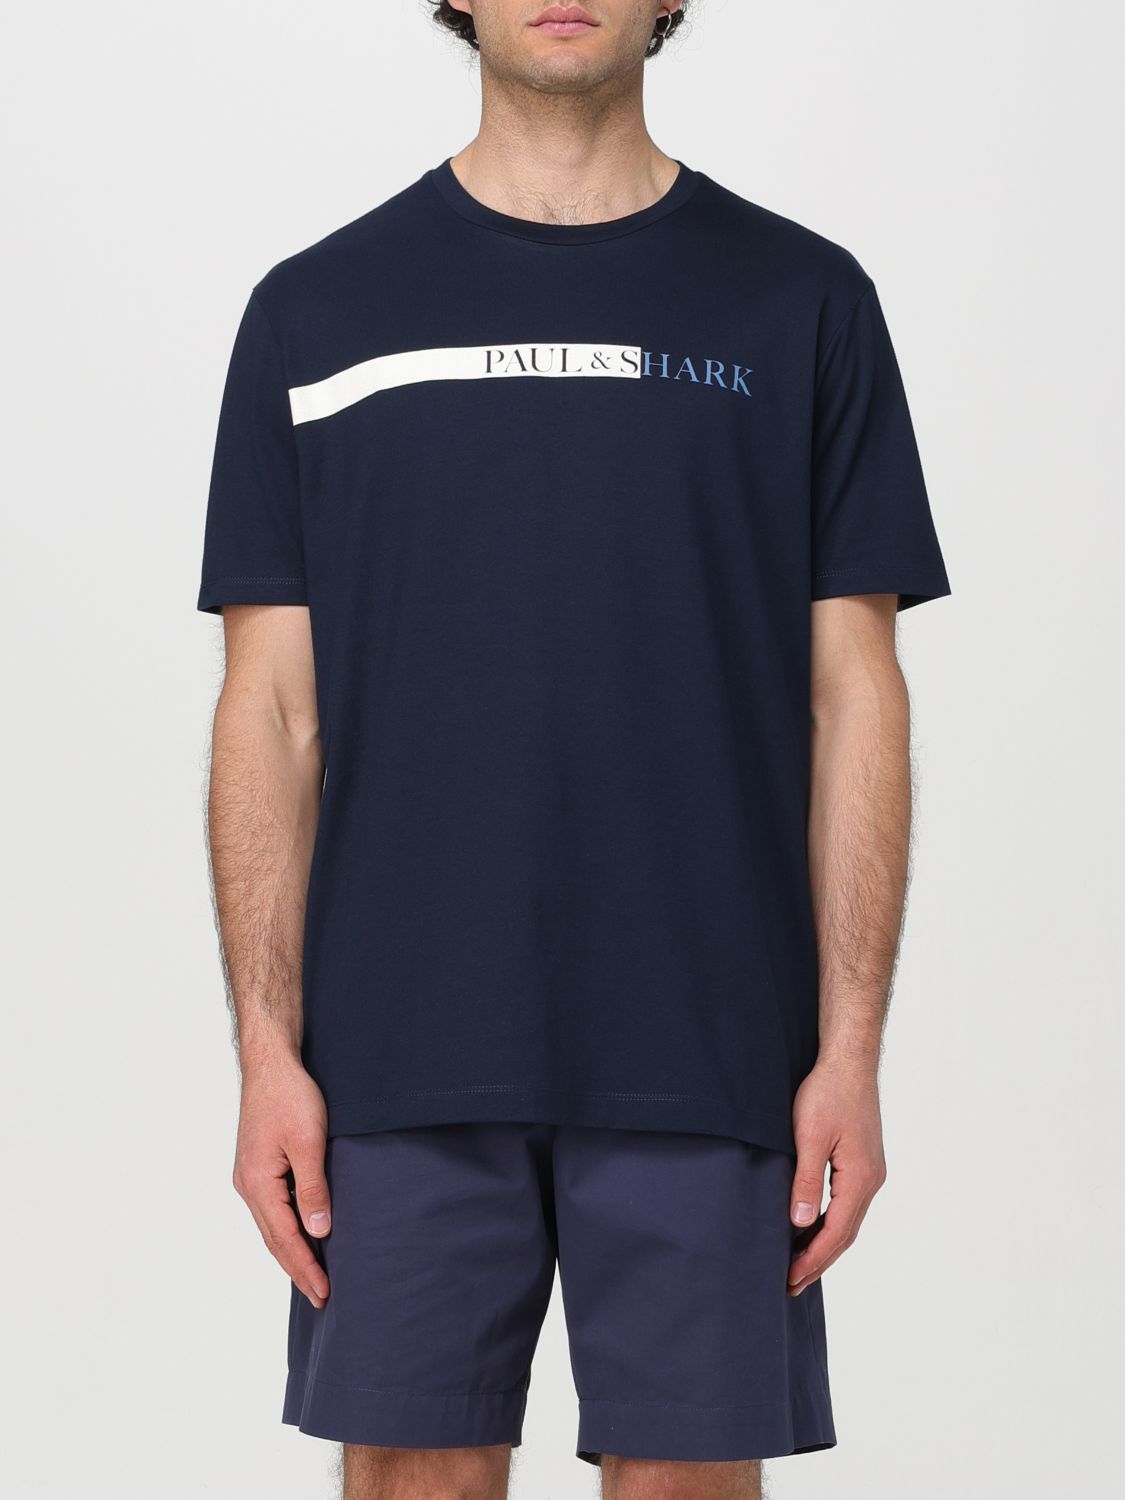 Paul & Shark T-Shirt PAUL & SHARK Men colour Navy